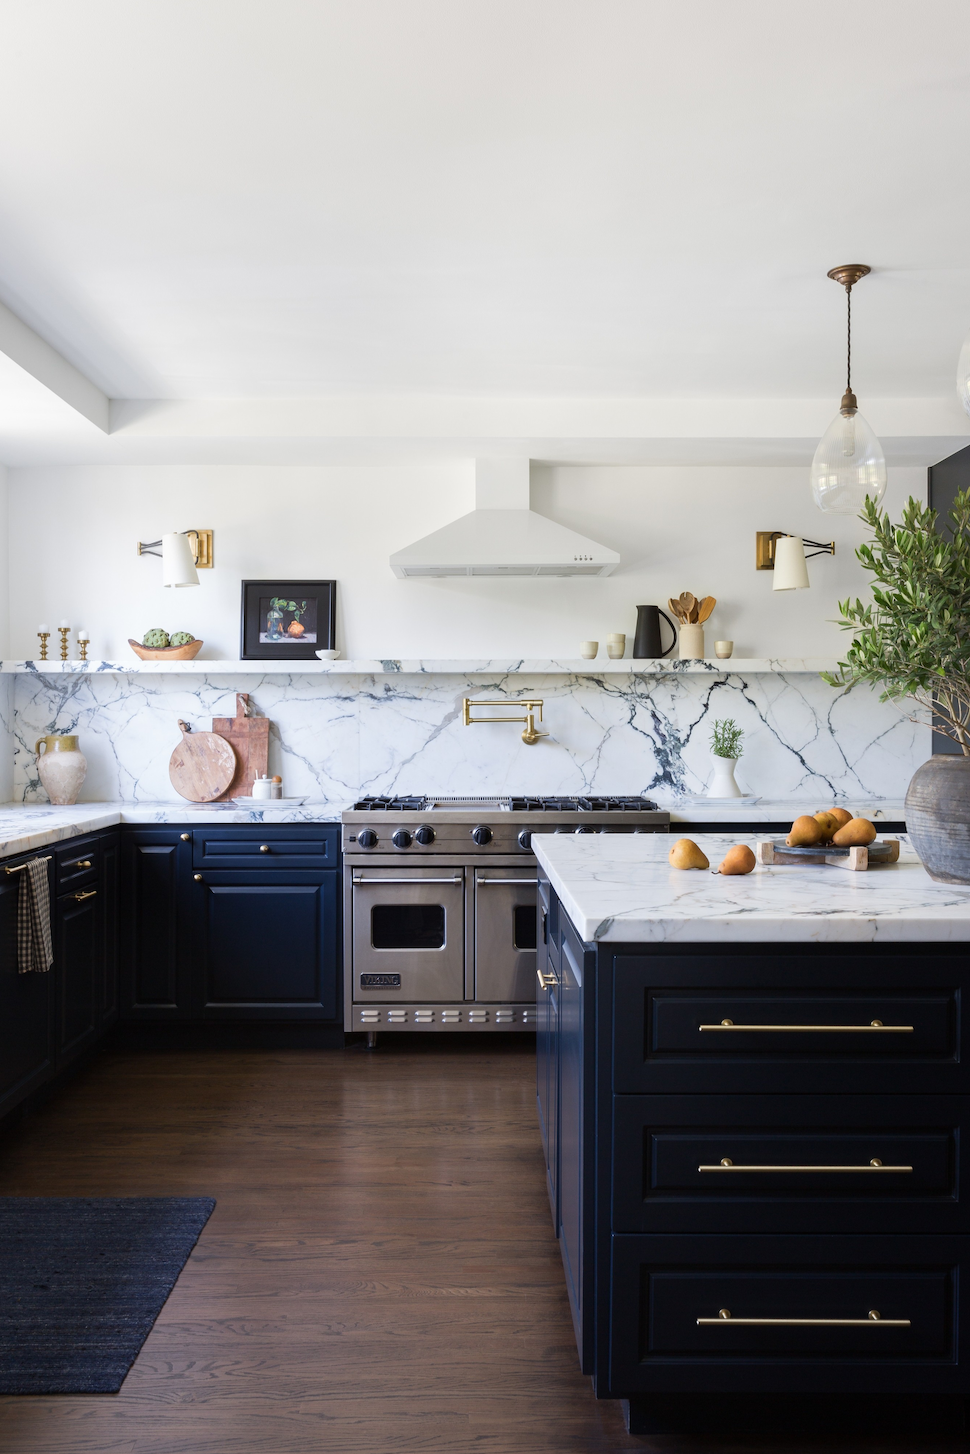 marble backsplash in navy and white kitchen